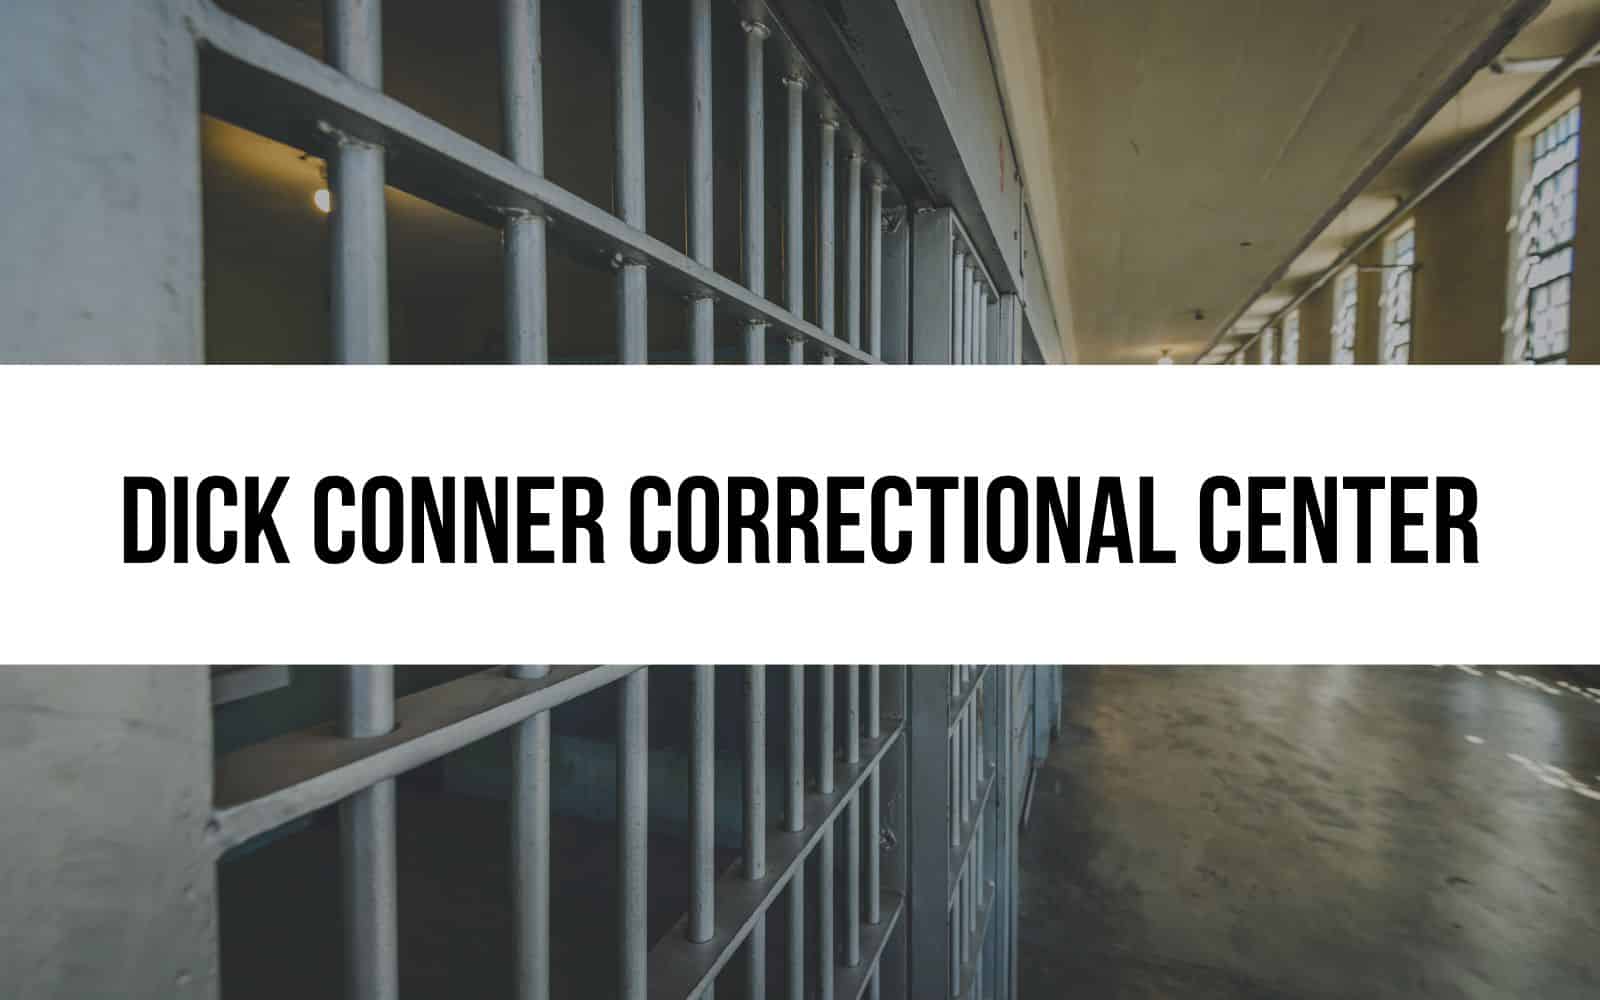 Dick Conner Correctional Center